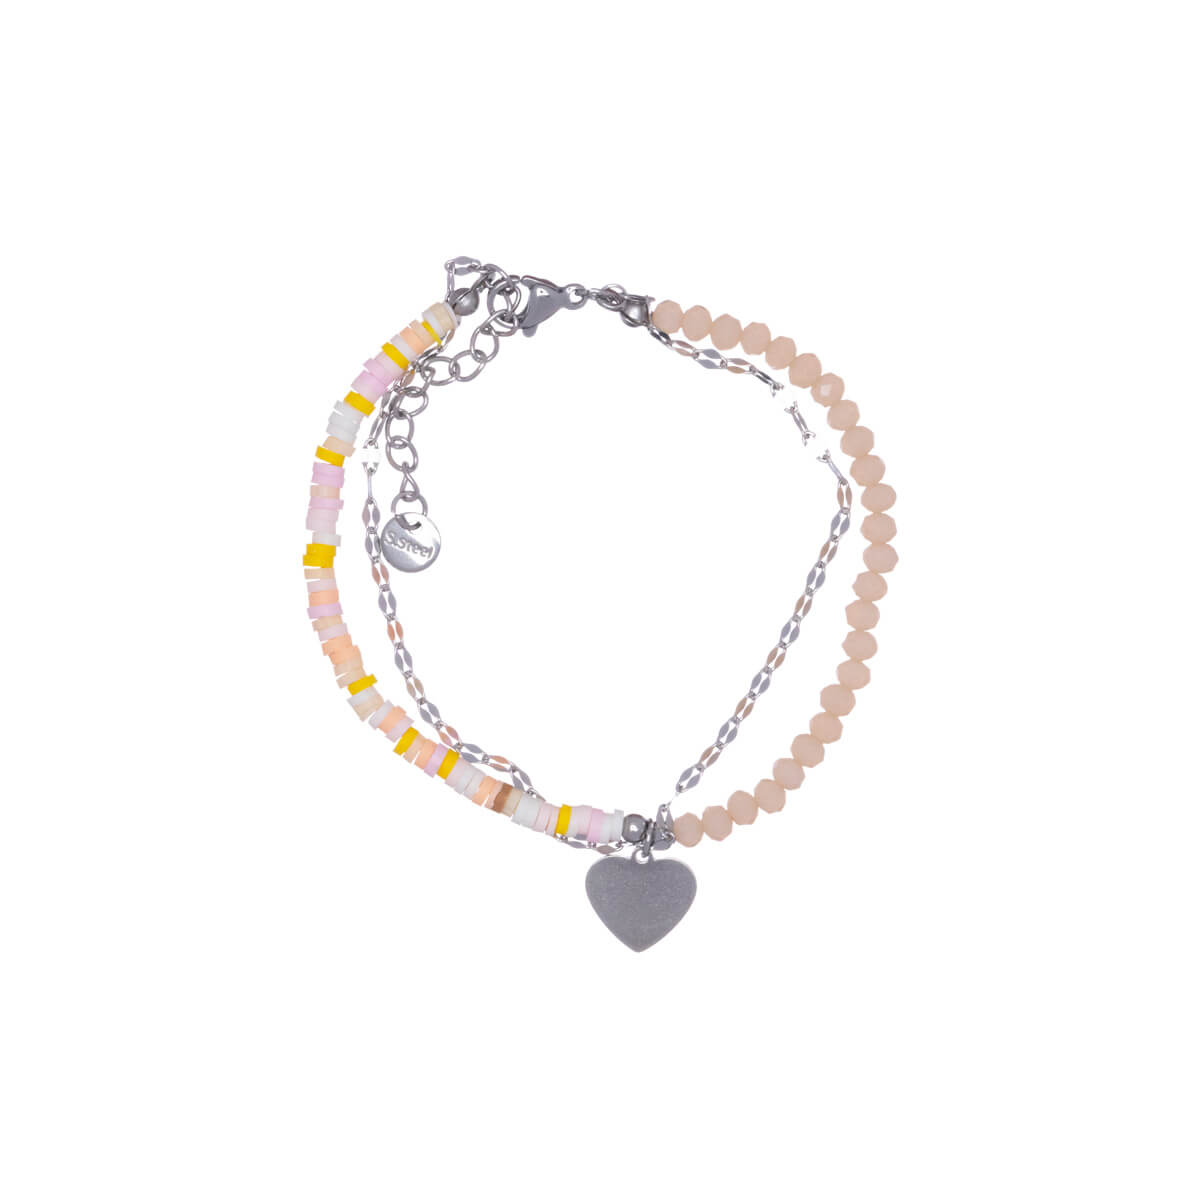 Heart jewelry with steel chain (steel 316L)